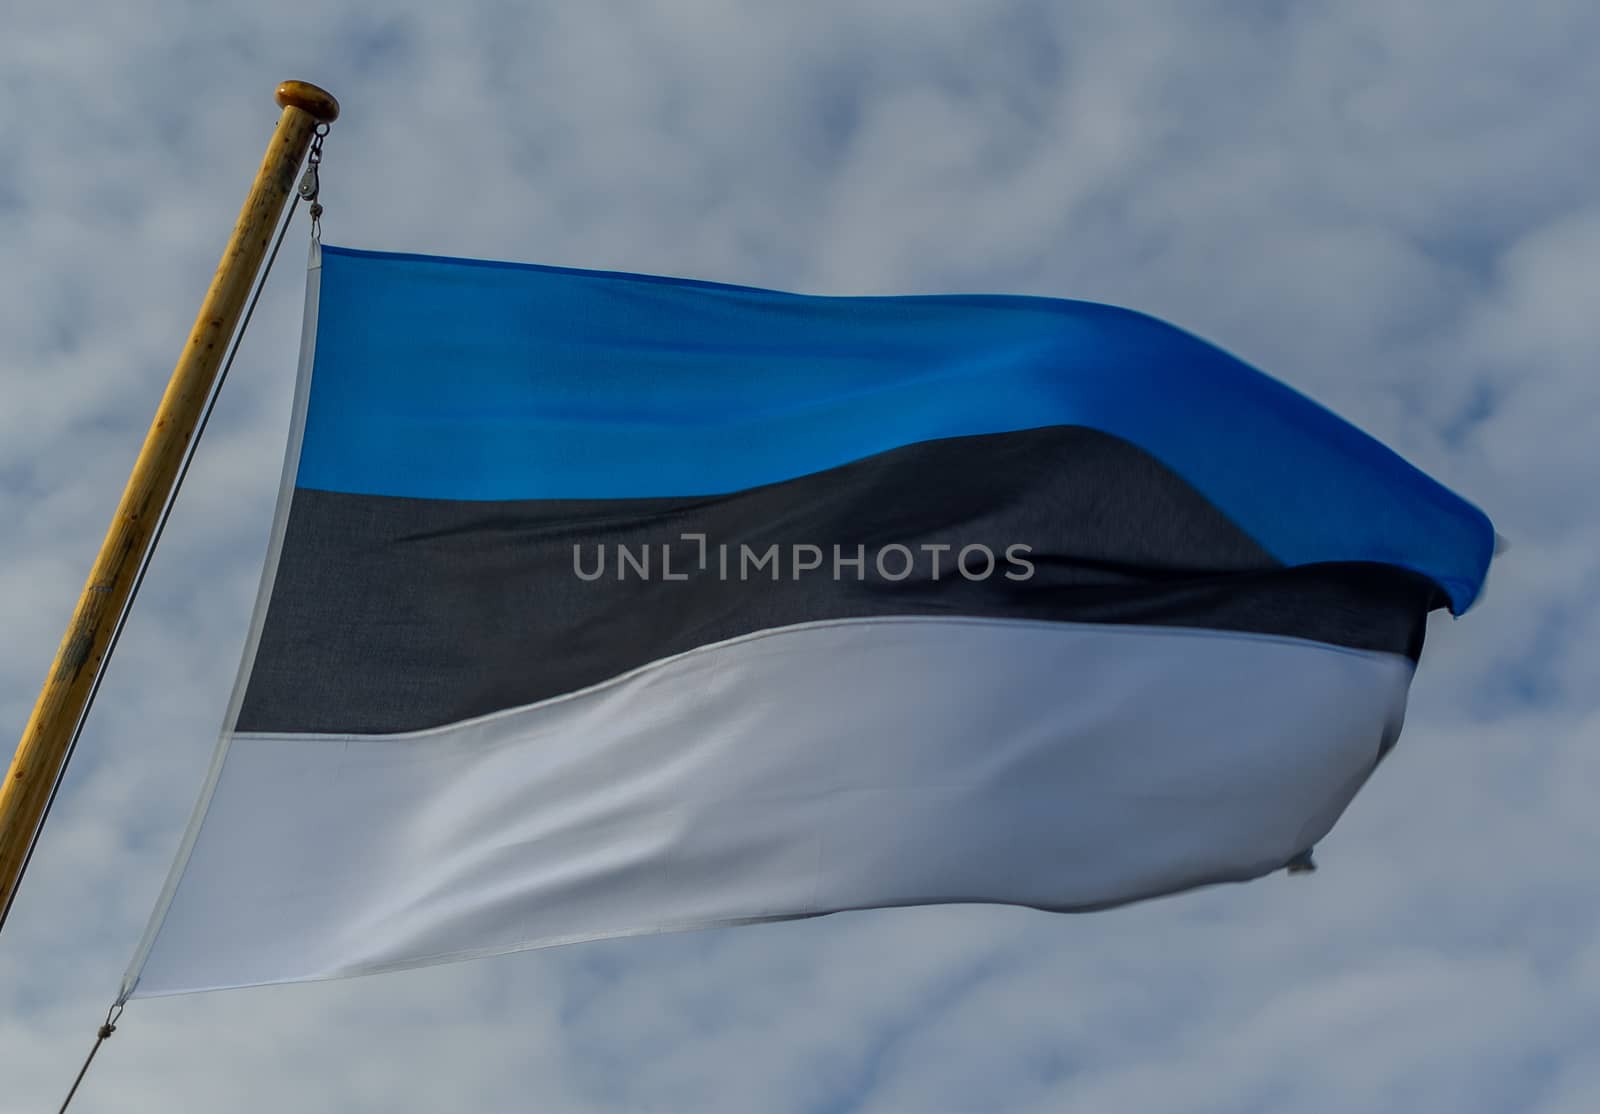 Estonian white-blue-black flag by fifg